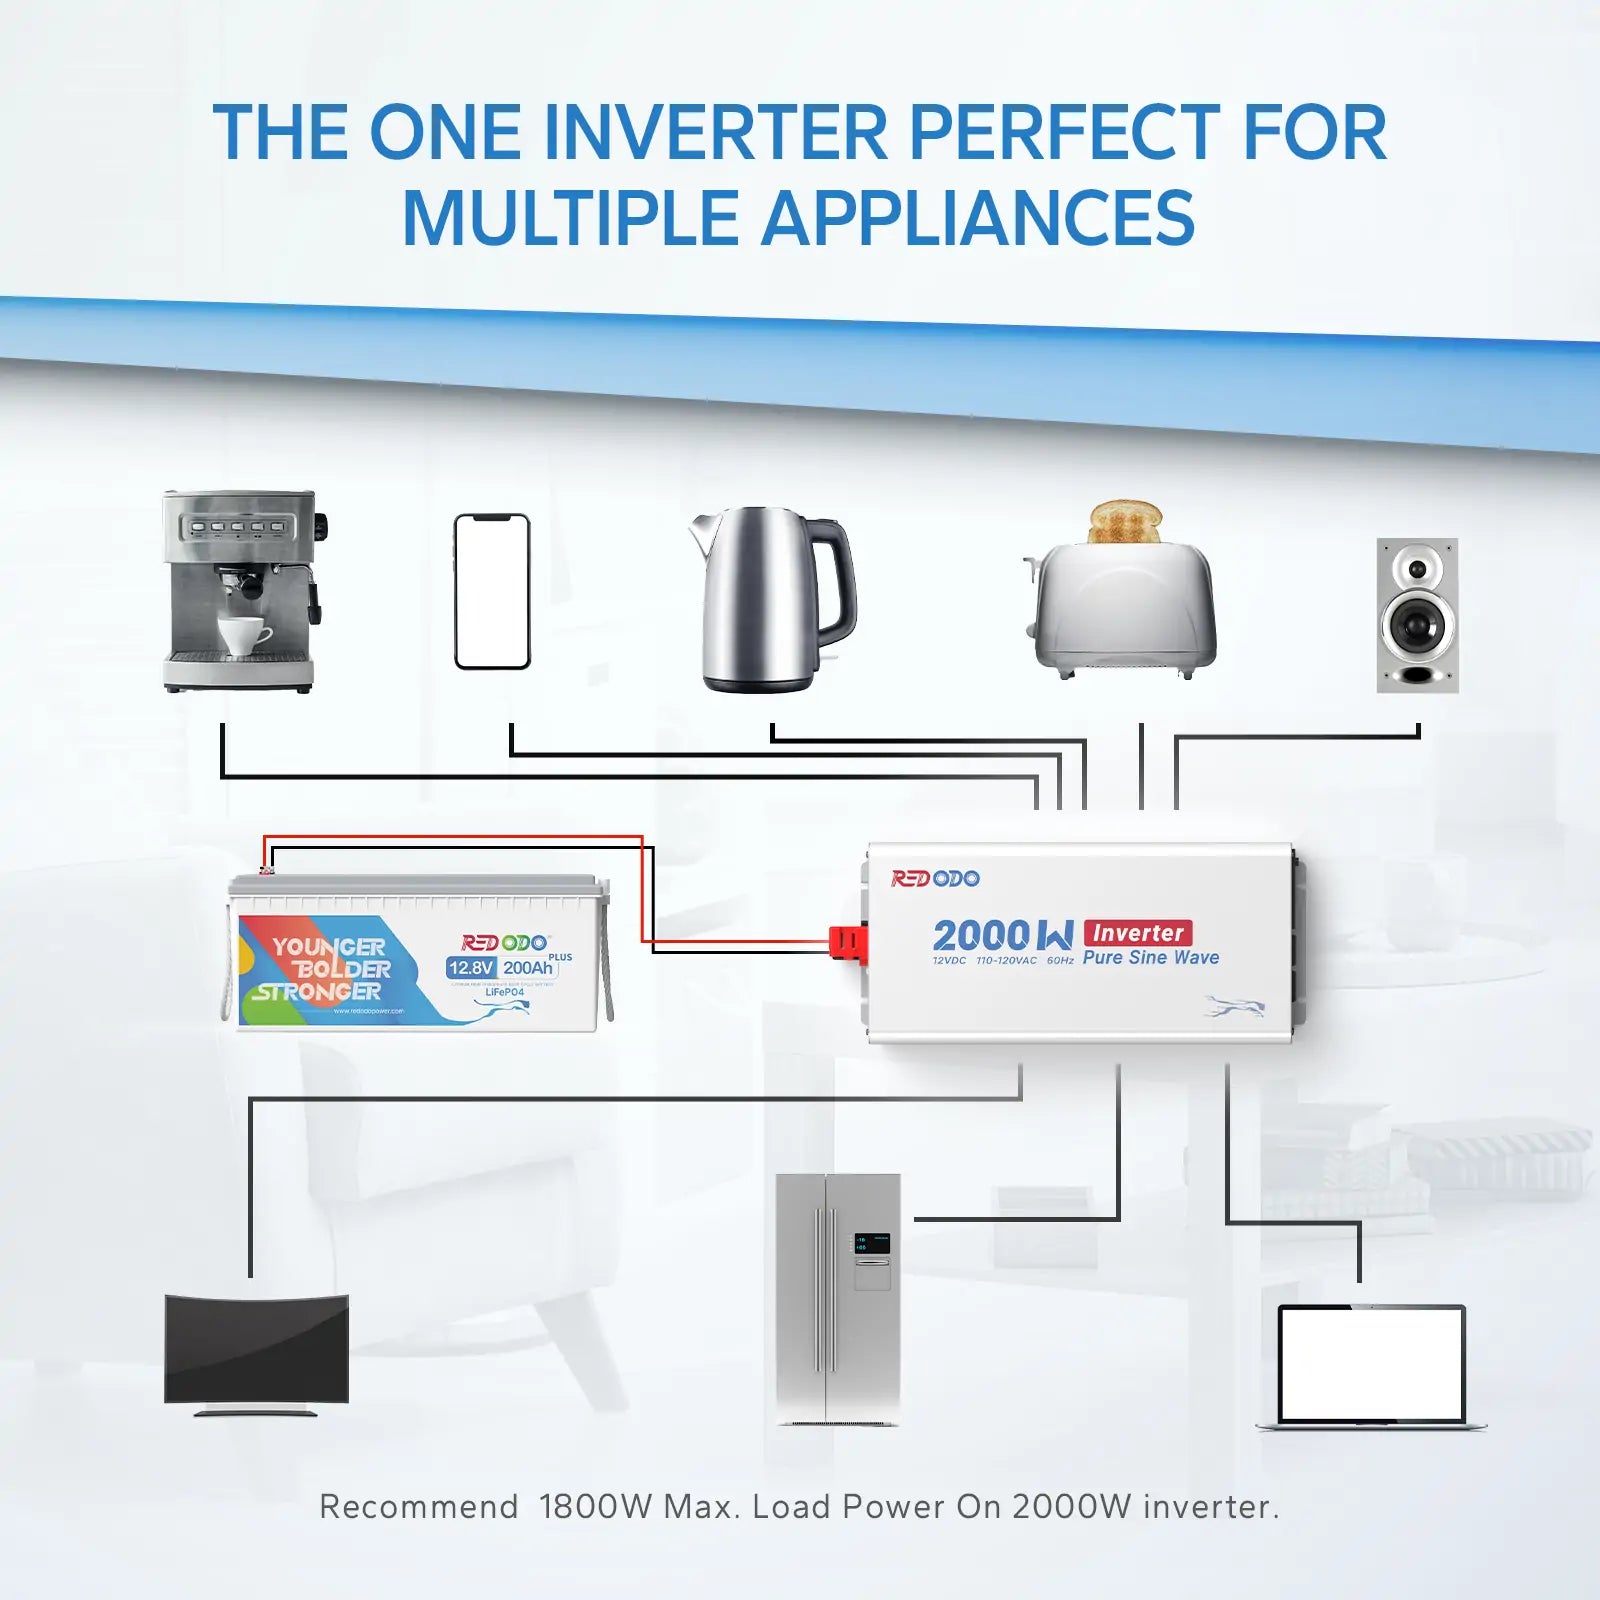 【Only $159】Redodo 2000W Pure Sine Wave Inverter, 90% Power Efficiency & LCD Monitor Redodo